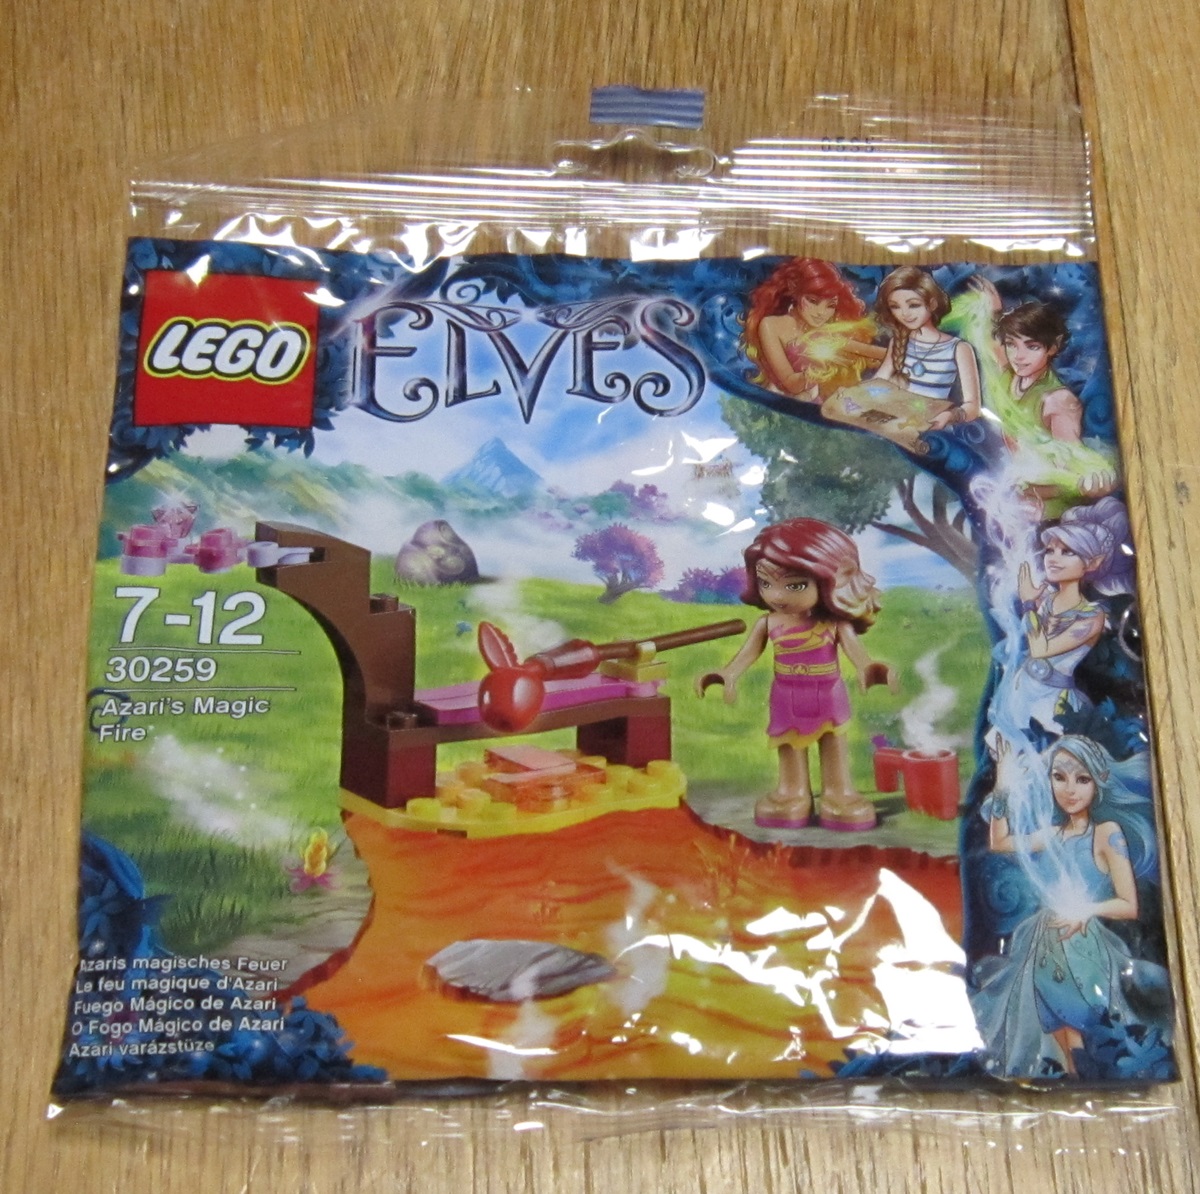 0130 Lego Elves 30259